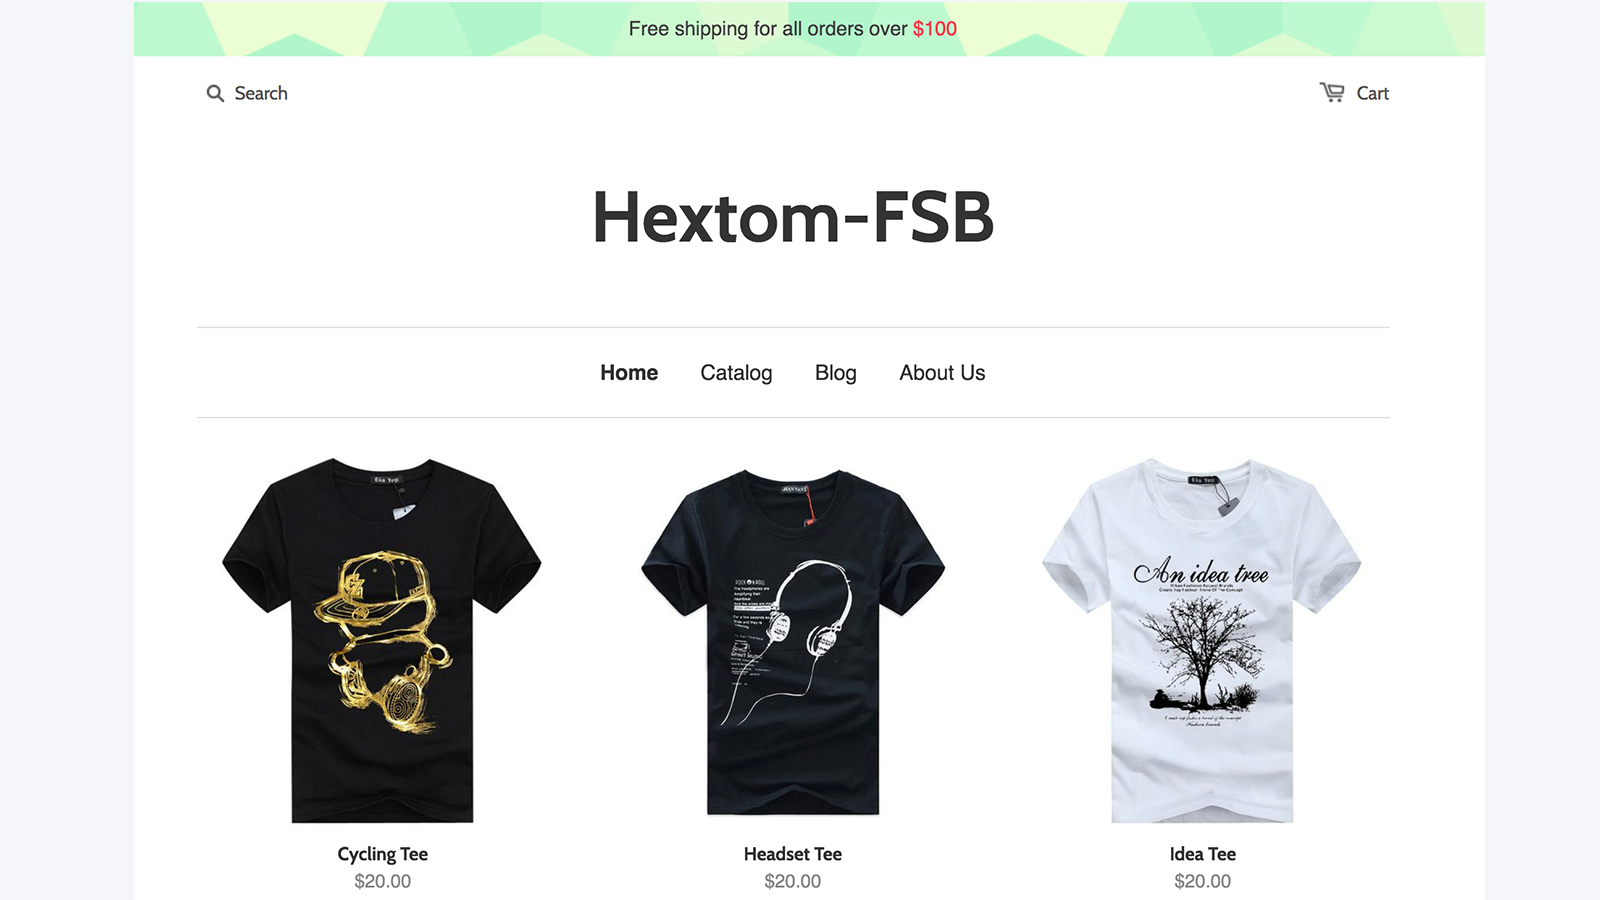 Hextom free shipping bar.